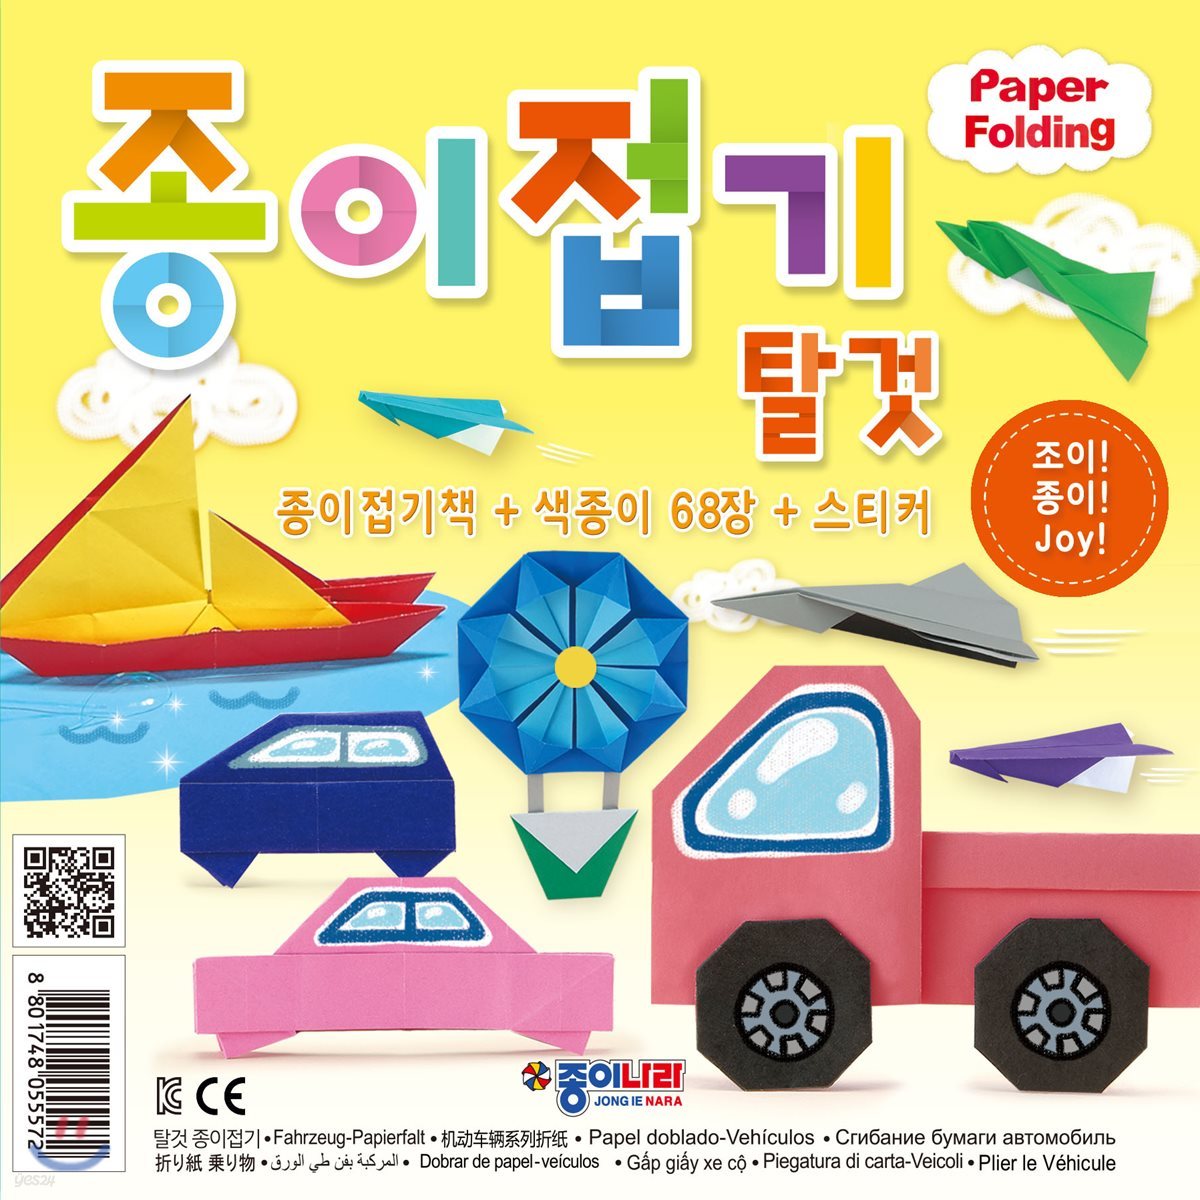 Paper Folding - Vehicle